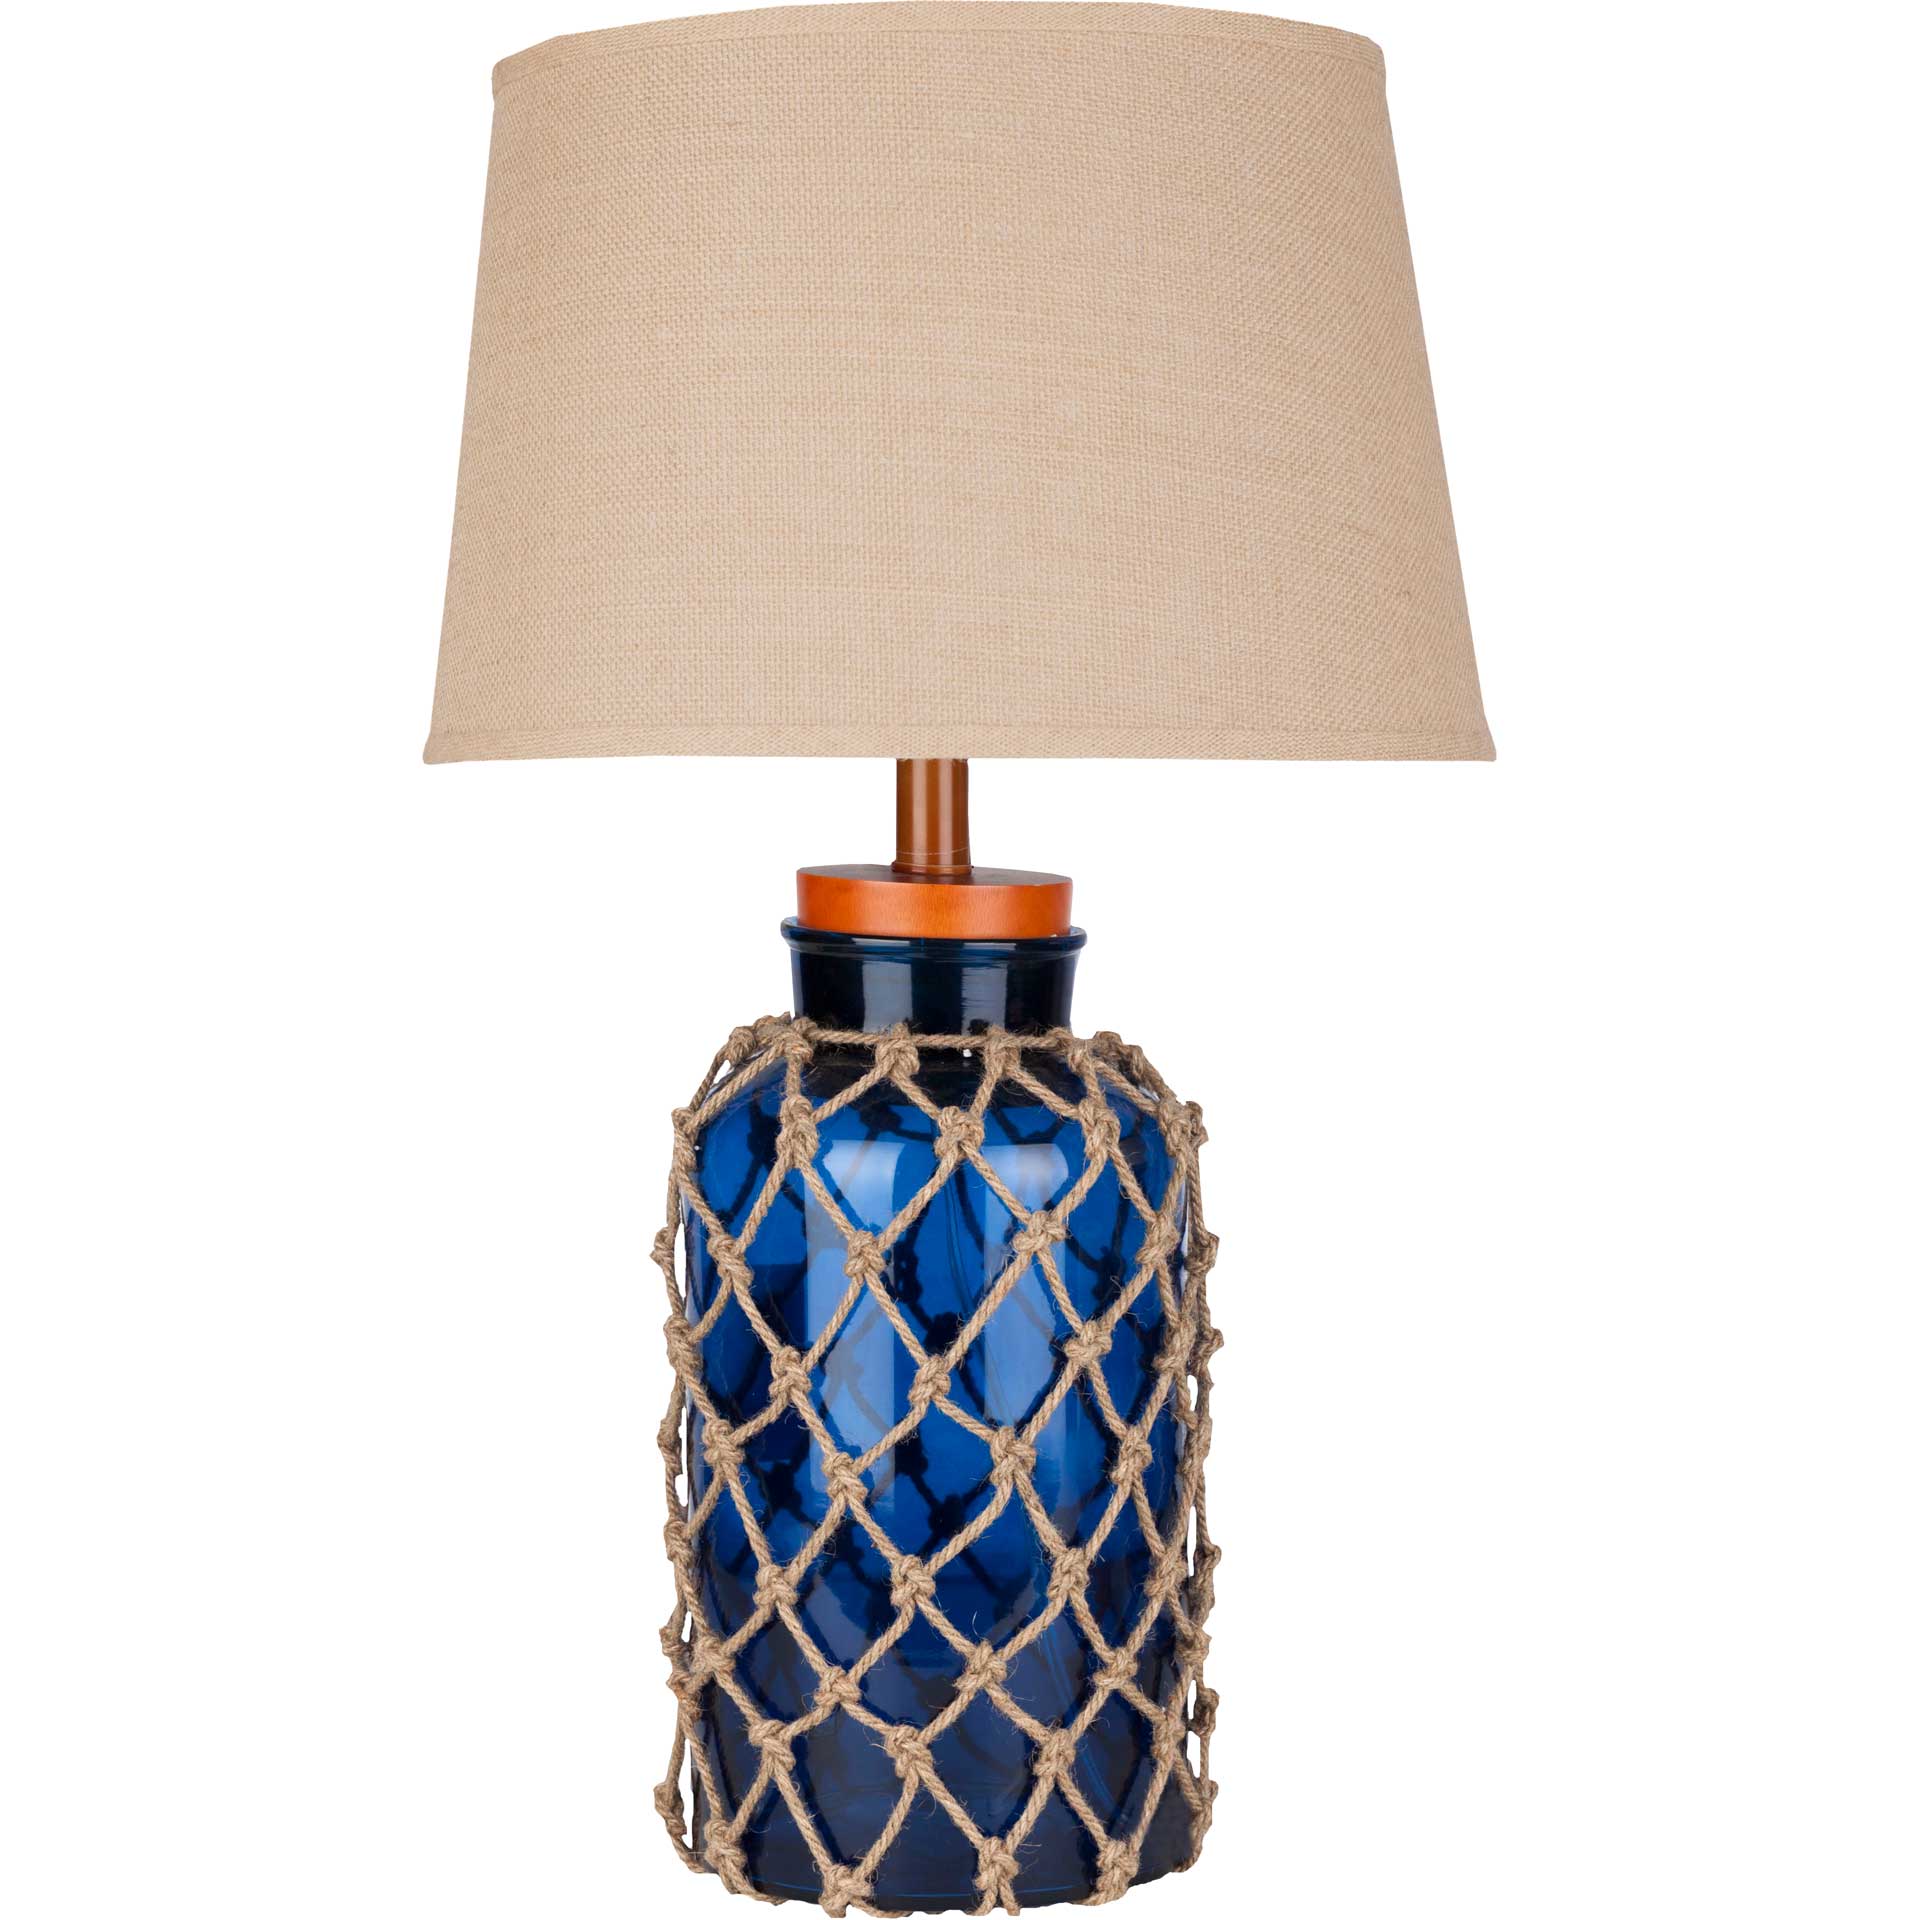 Amaia Table Lamp Dark Blue/Wheat/Navy